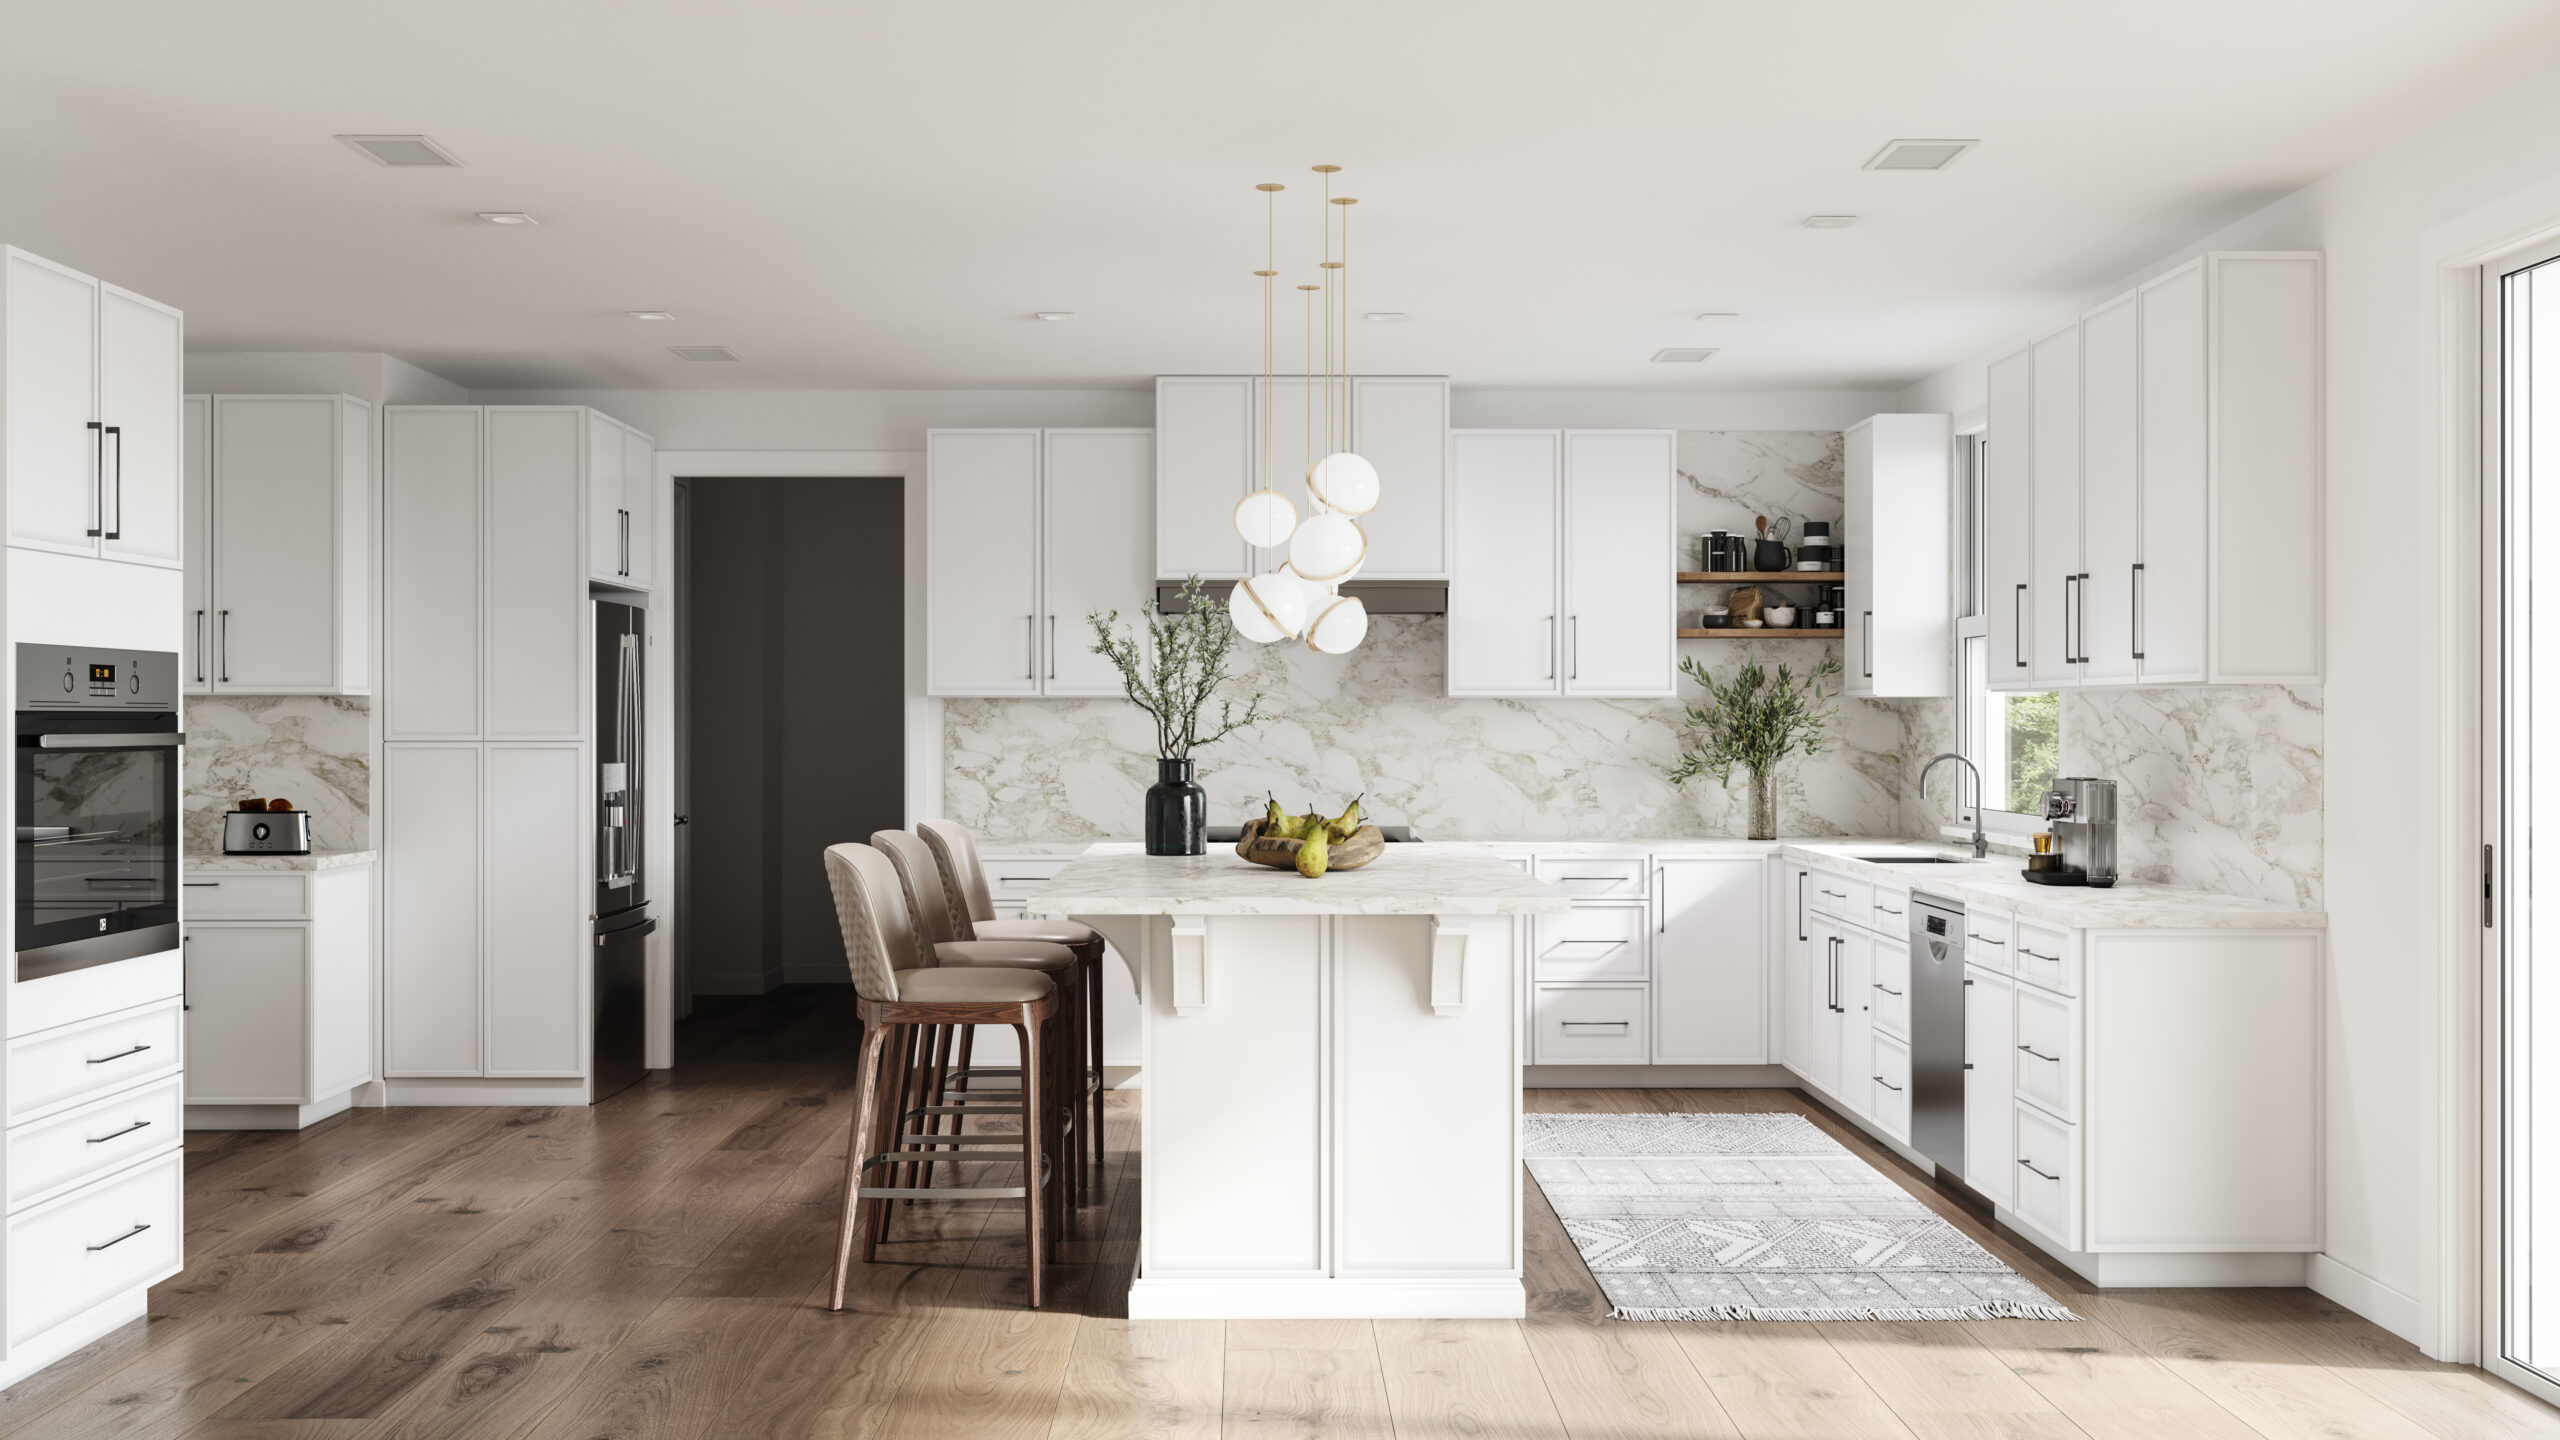 Spacious white kitchen design with light wood flooring